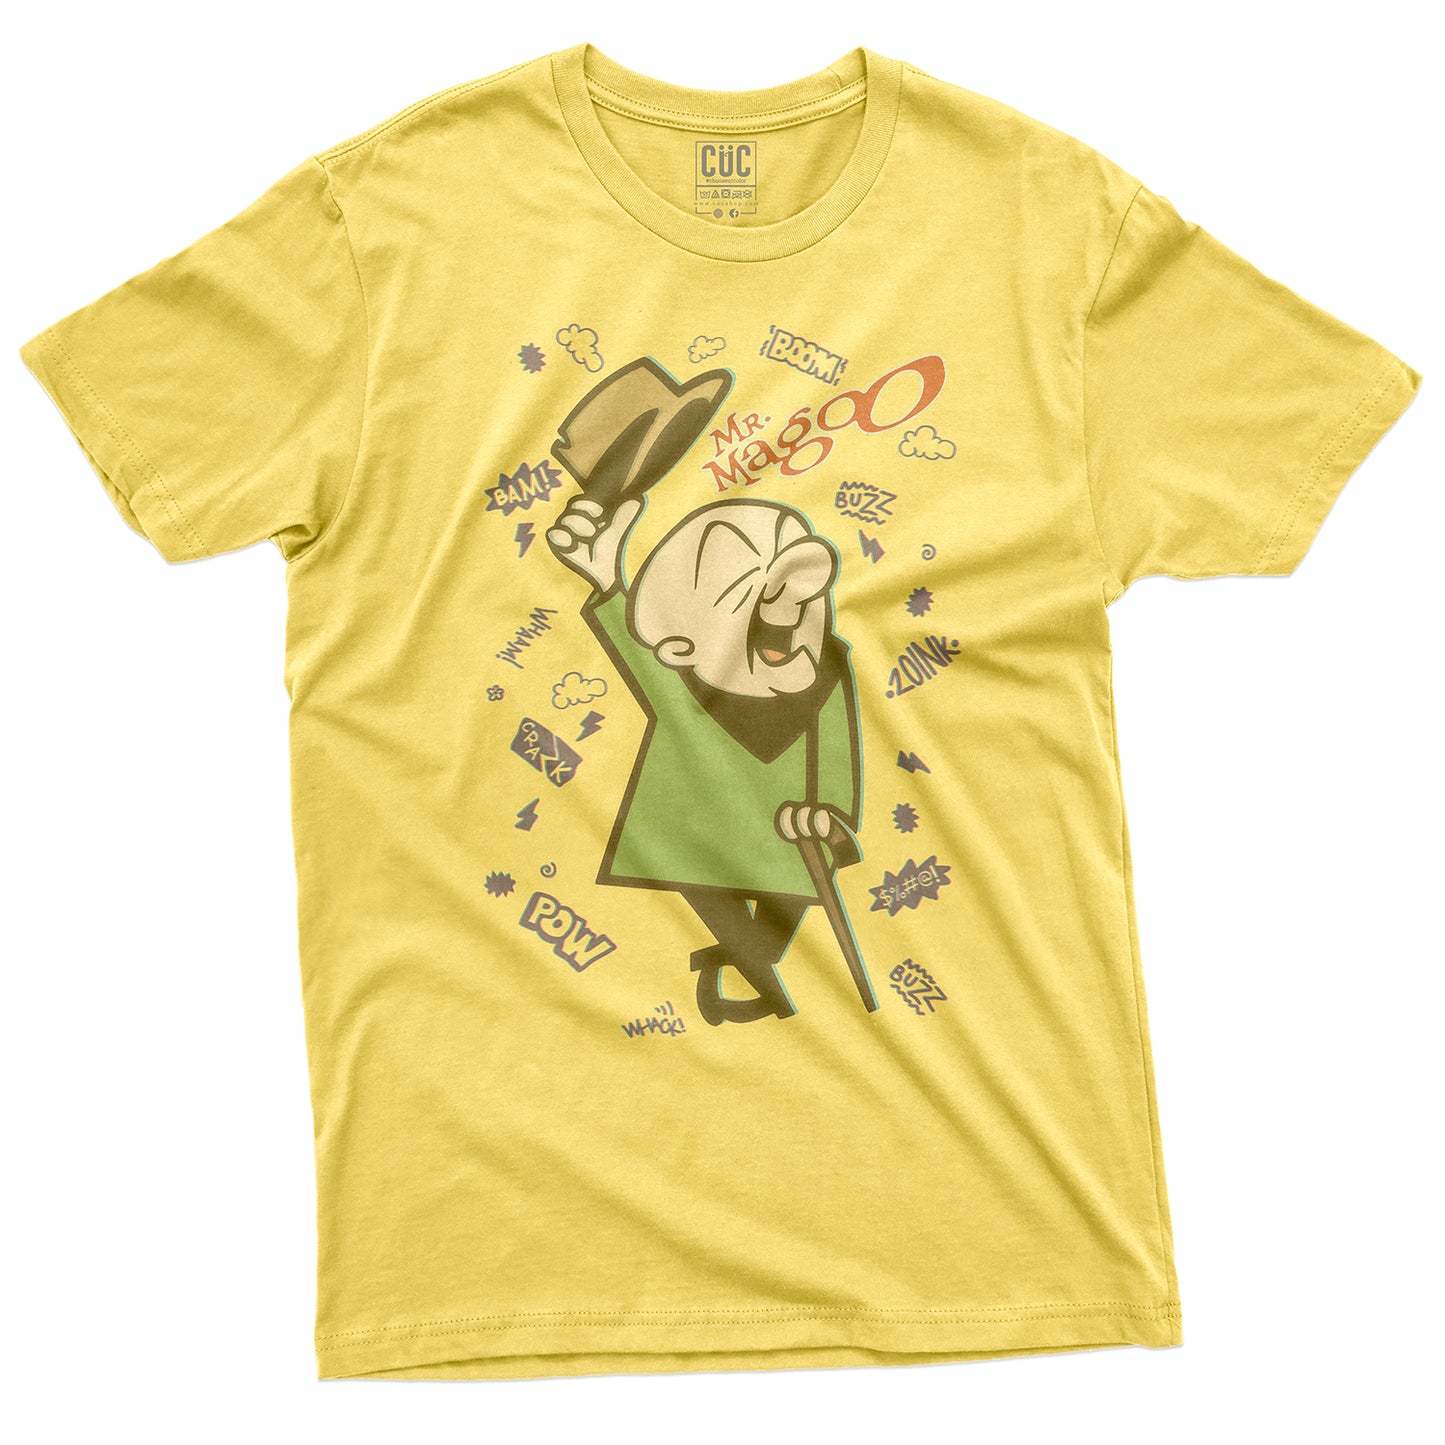 CUC T-Shirt MR. MAGOO - Mister Magoo - Vintage - Cartoon #chooseurcolor